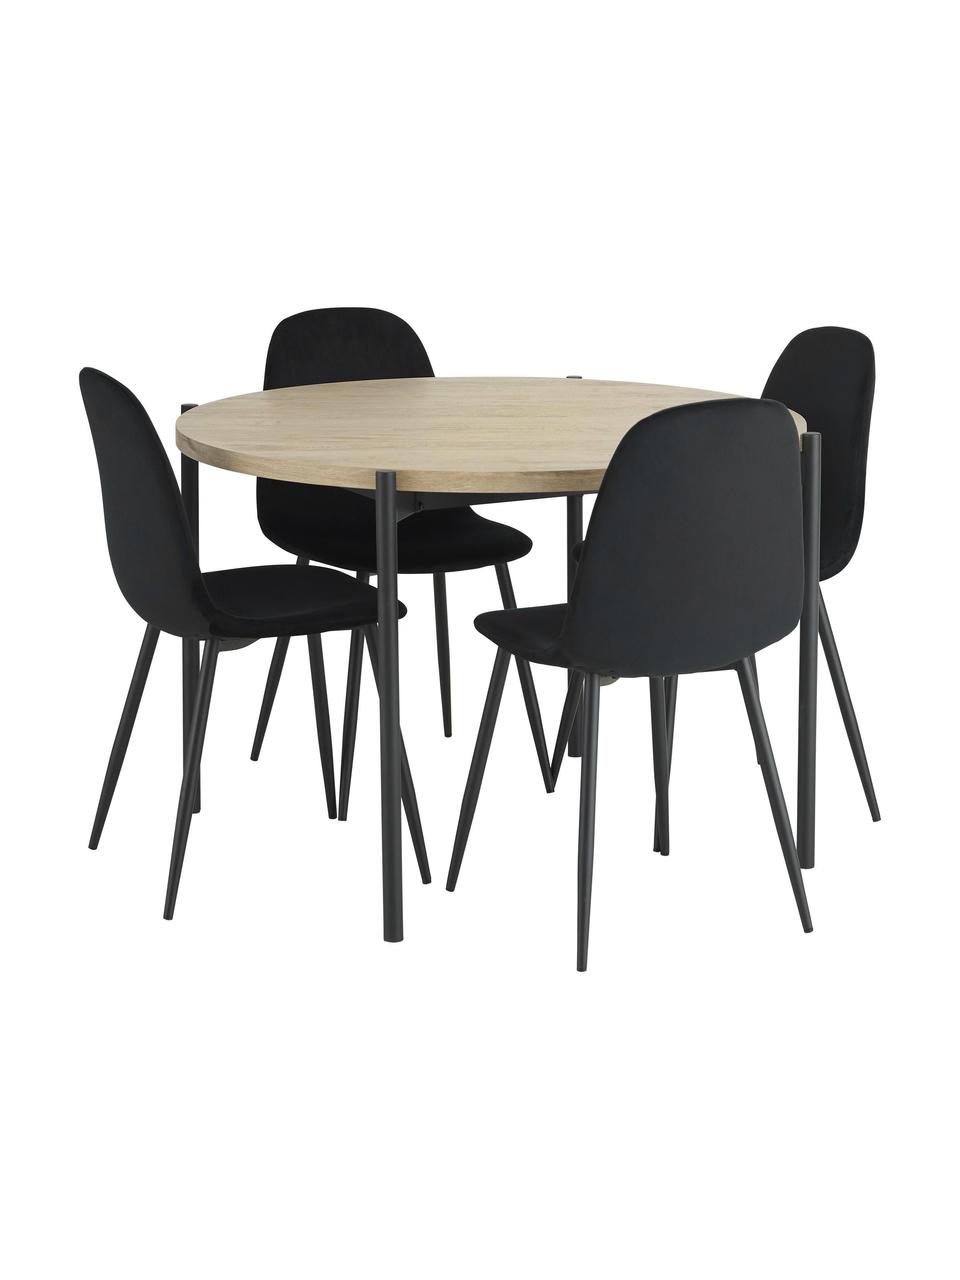 Okrúhly jedálenský stôl so zamatovými stoličkami Gilda, Ø 110 cm, Zamatová čierna, svetlé drevo, Ø 110 x V 75 cm